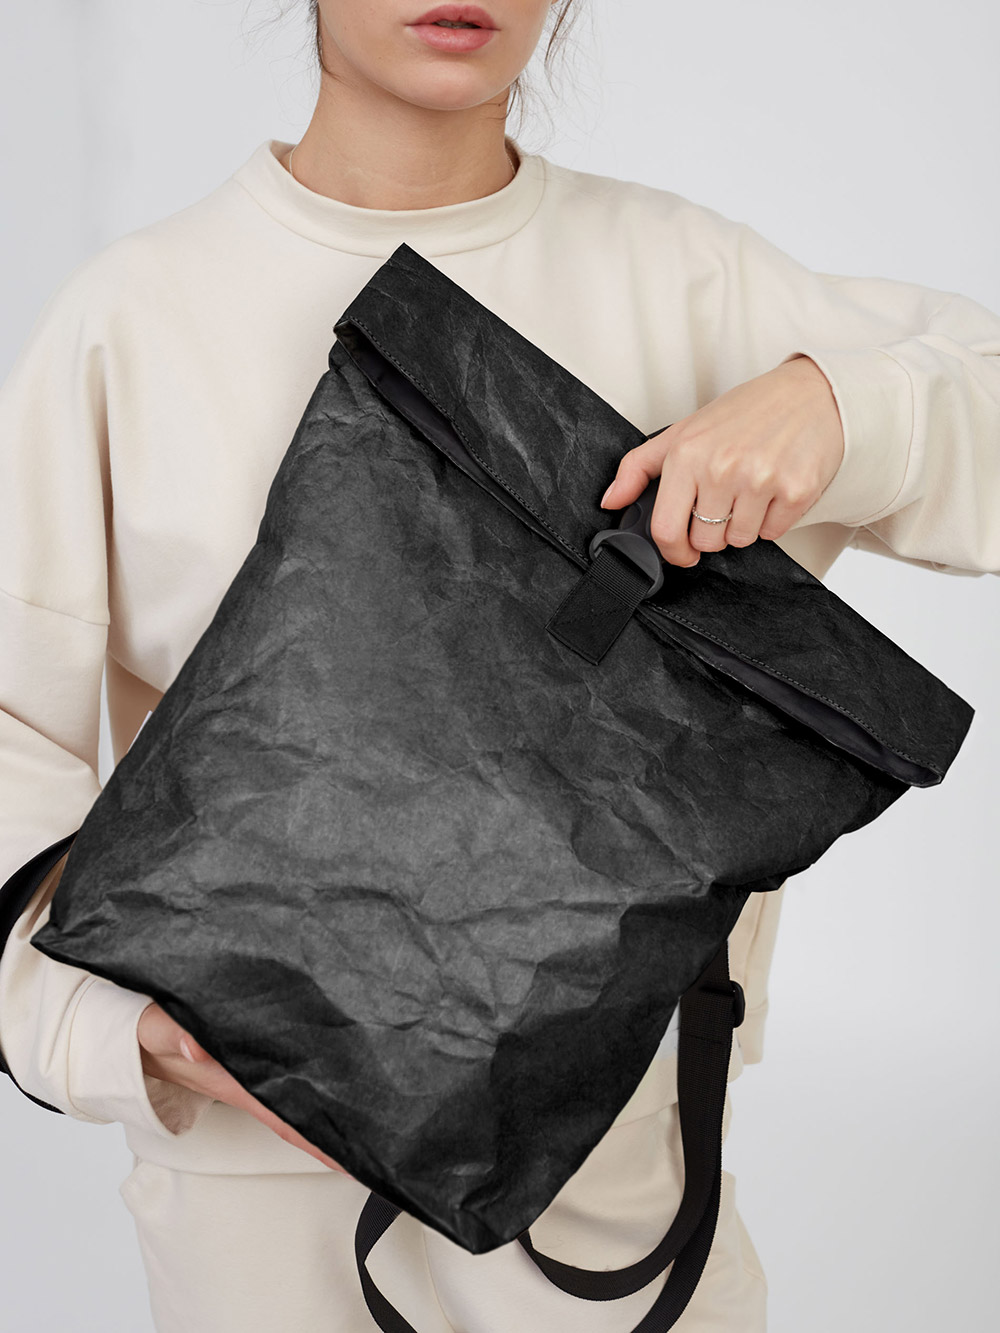 Рюкзак Rolly Kraft Black картинка крафт-сумки